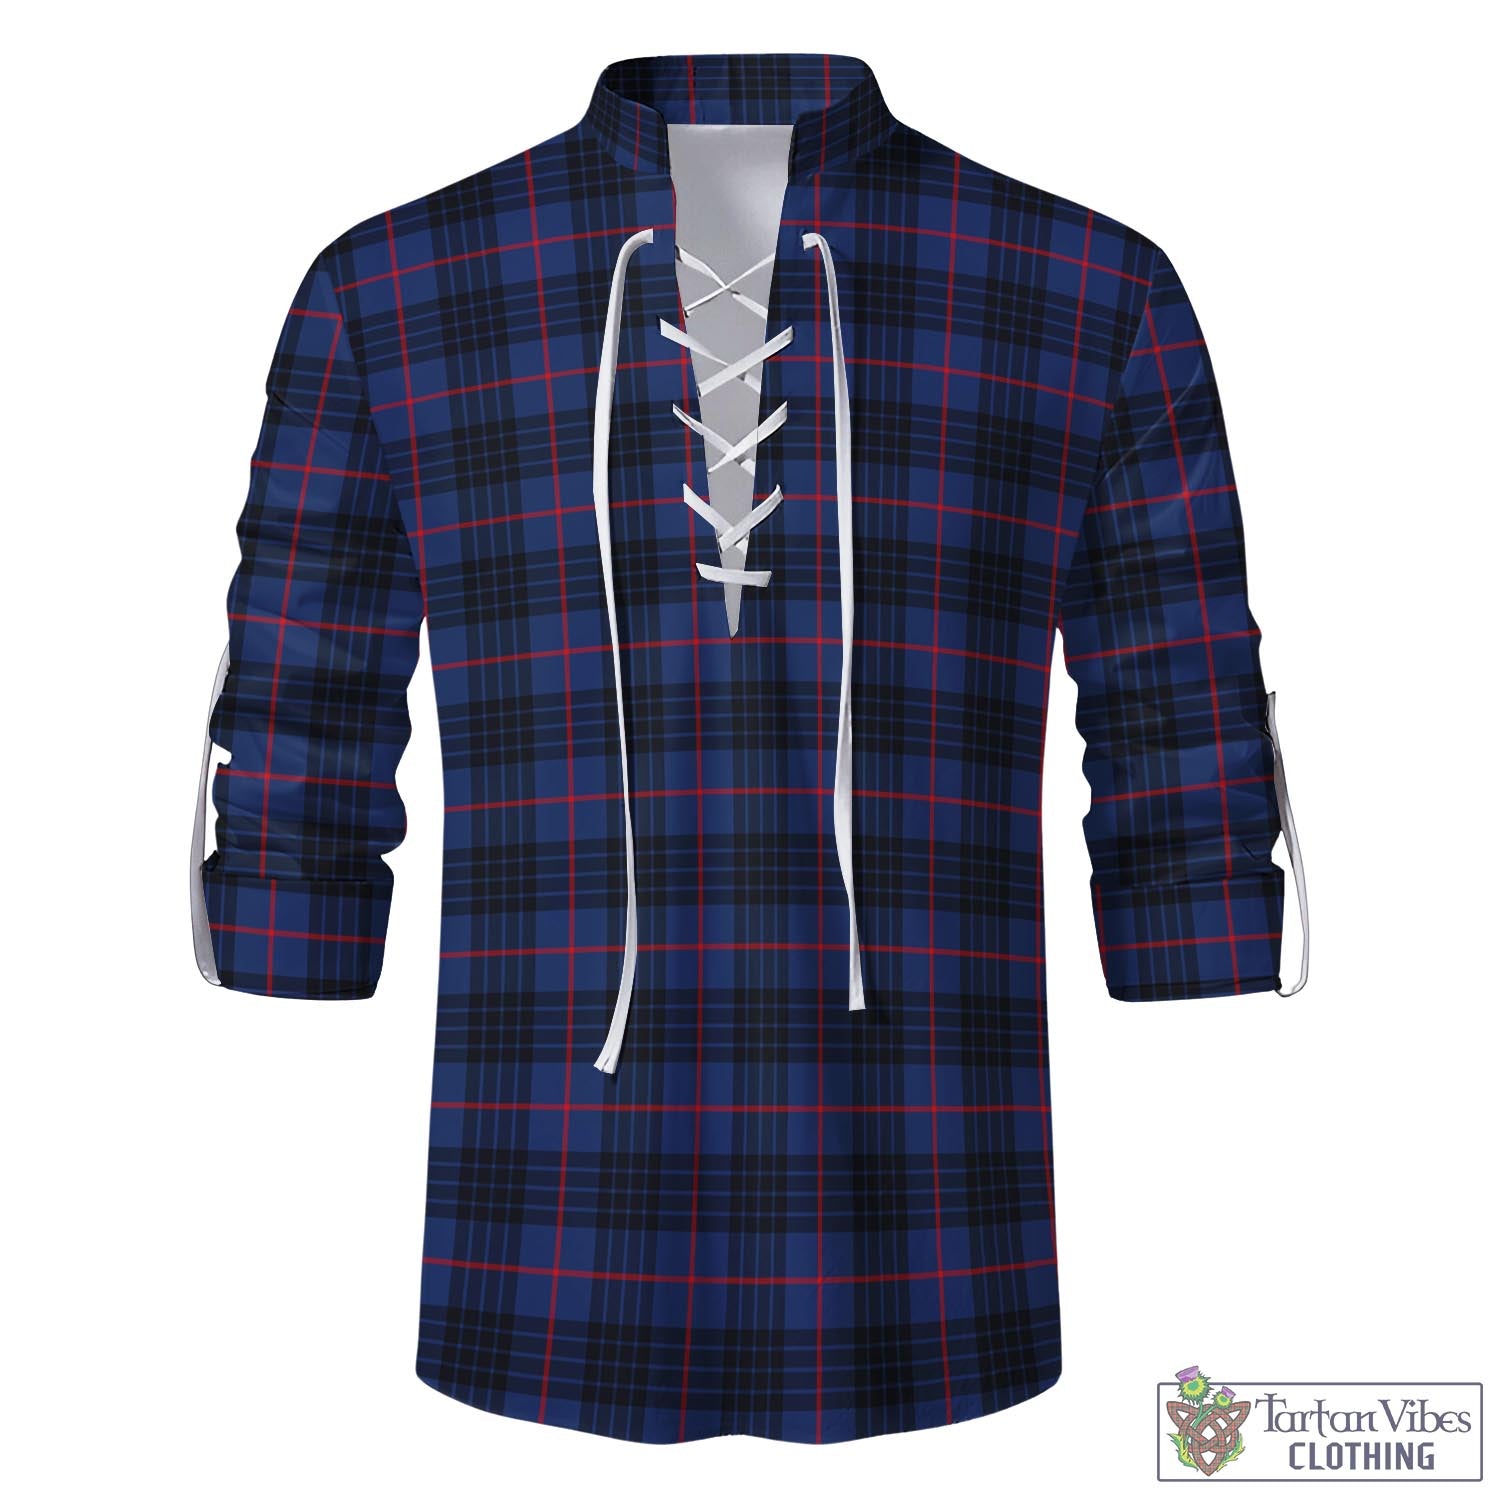 Tartan Vibes Clothing McCoy Blue Tartan Men's Scottish Traditional Jacobite Ghillie Kilt Shirt